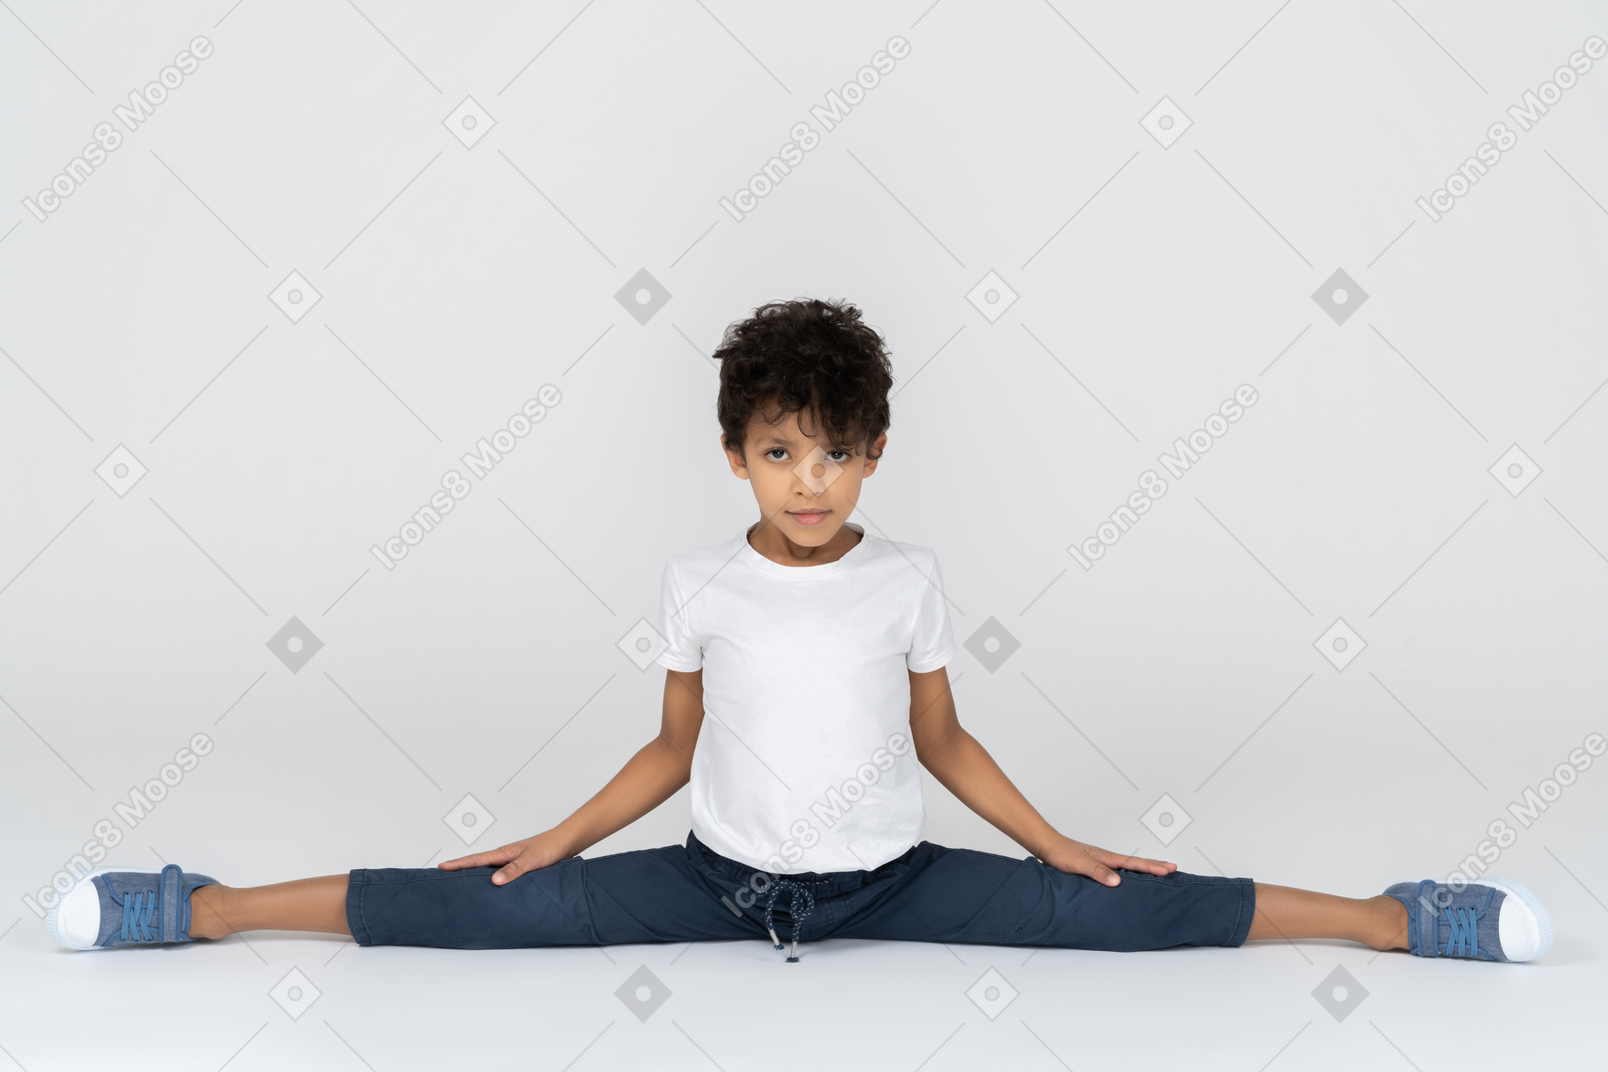 A boy doing split exercise